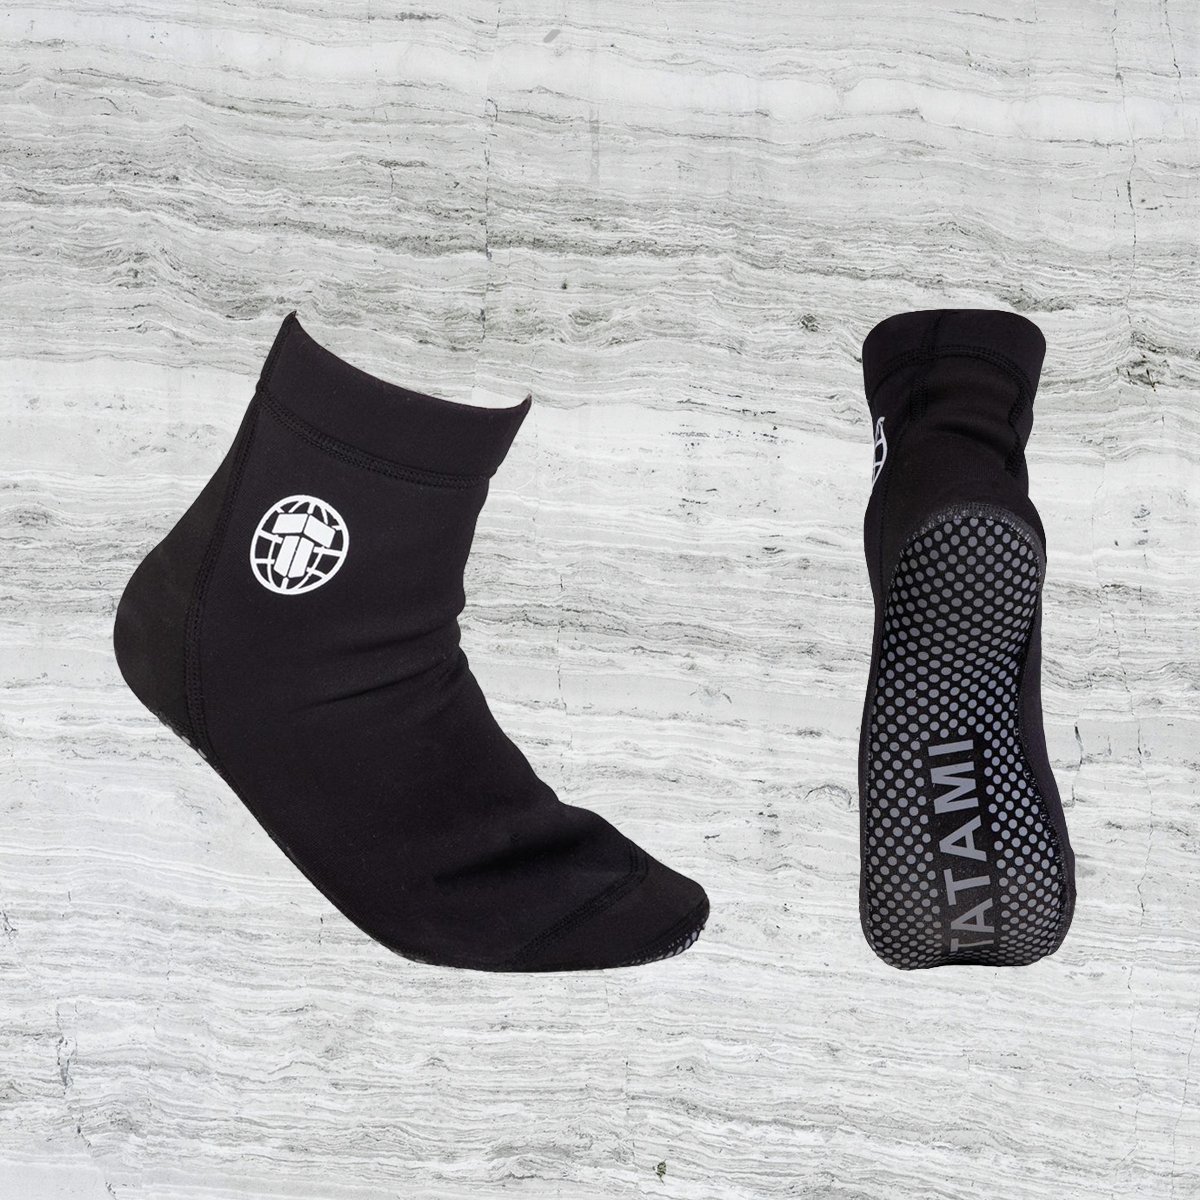 Playwell MMA Grappling Socks Black Tatami Mat Protection Foot Feet